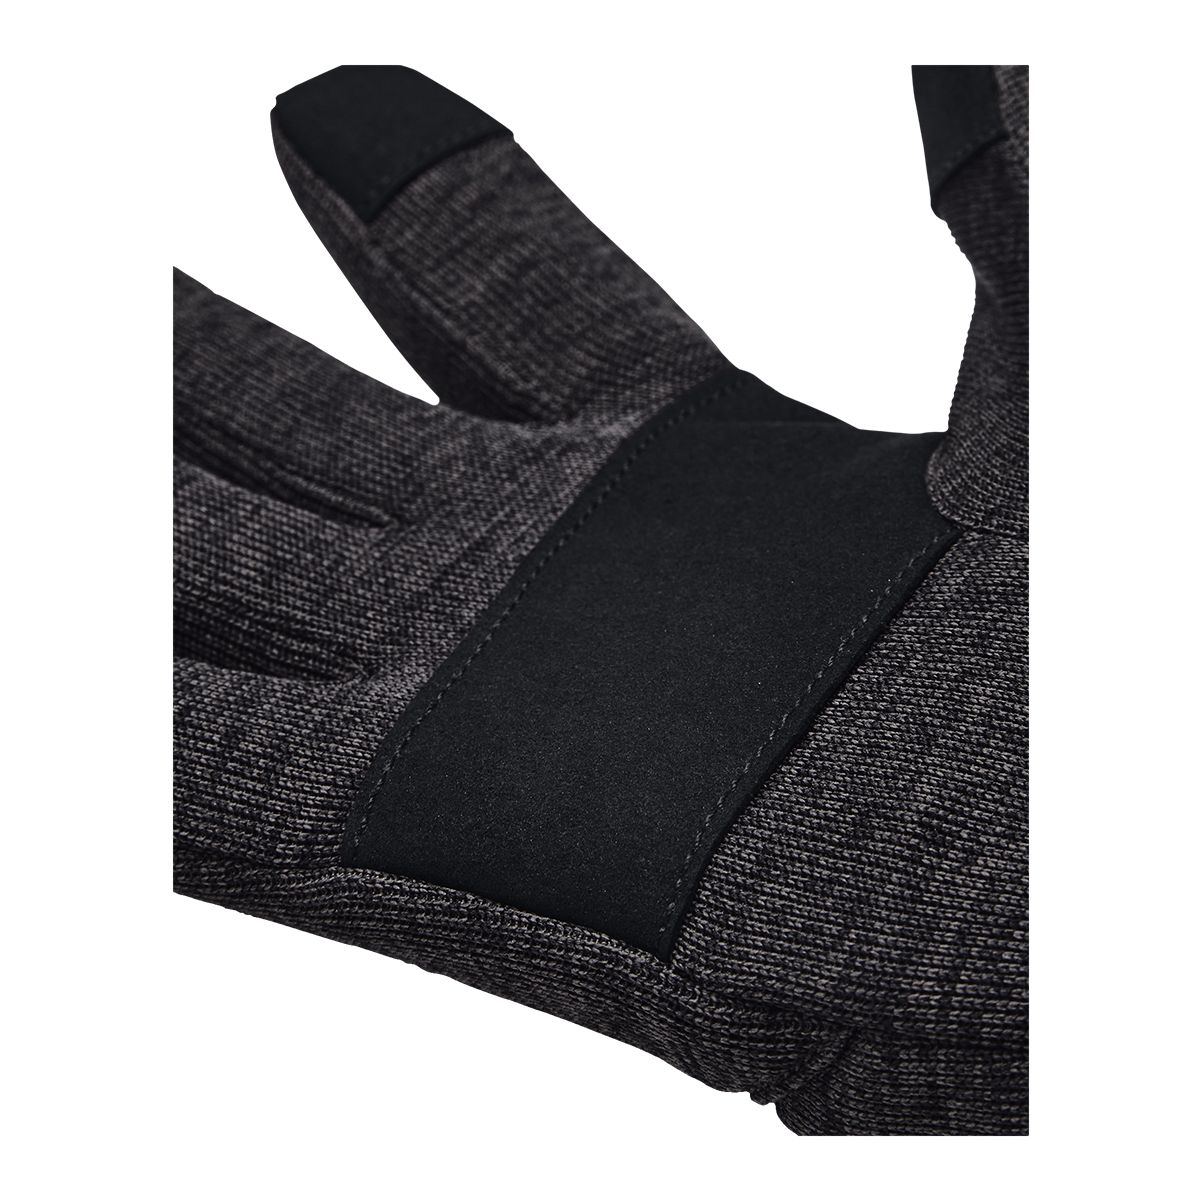 Under Armour Men's Tactical ColdGear Infrared Gloves, Dark Navy Blue  (465)/Dark Navy Blue, Small/Medium, Gloves -  Canada